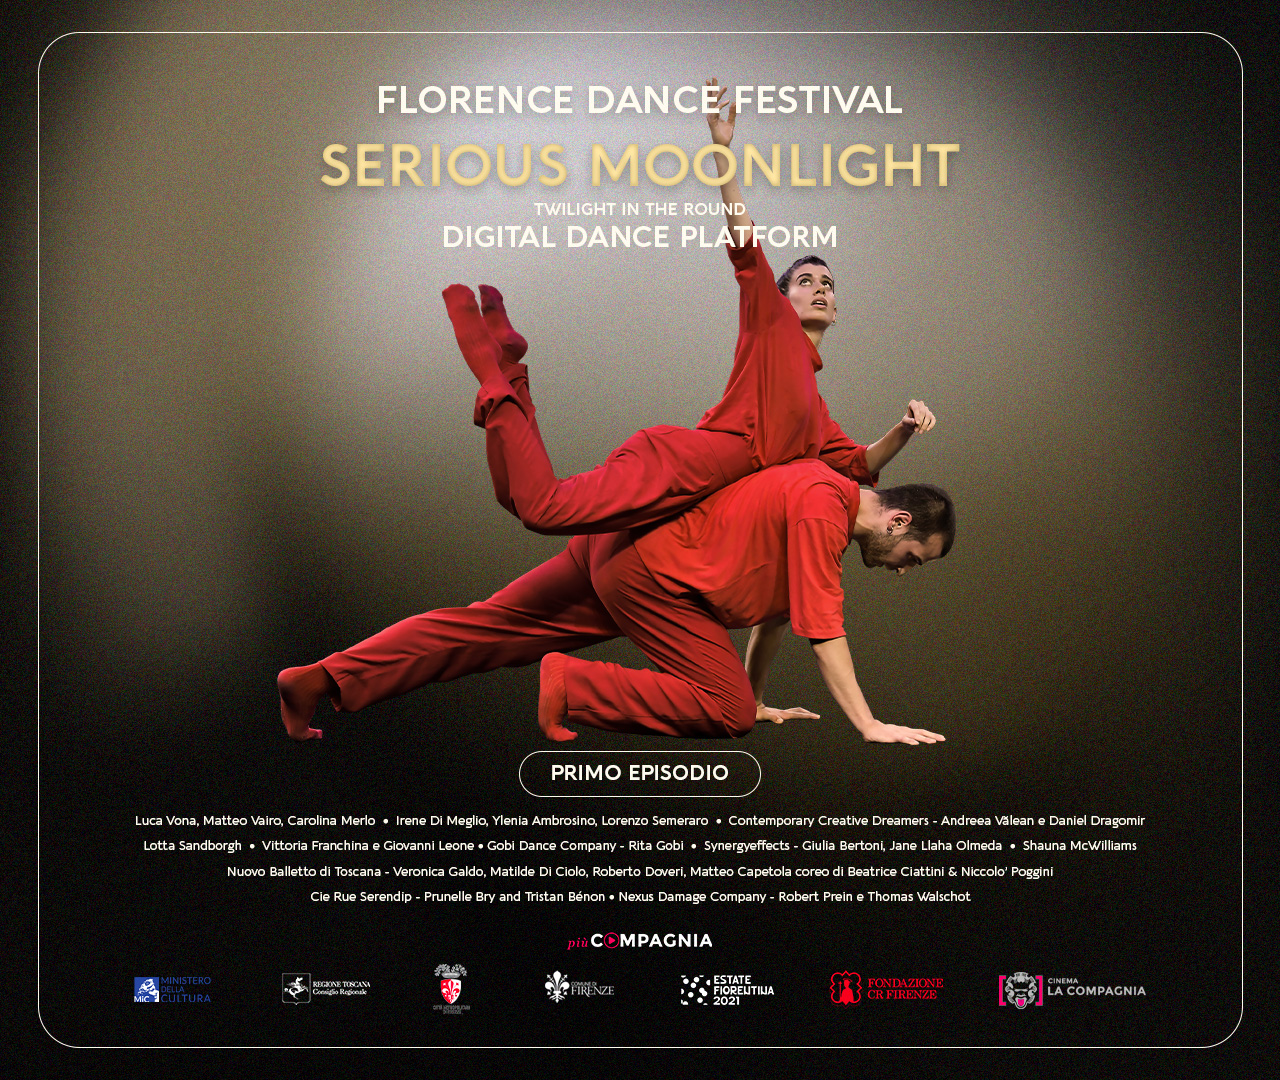 Digital Dance Platform - Episodio 1 - Florence Dance Festival